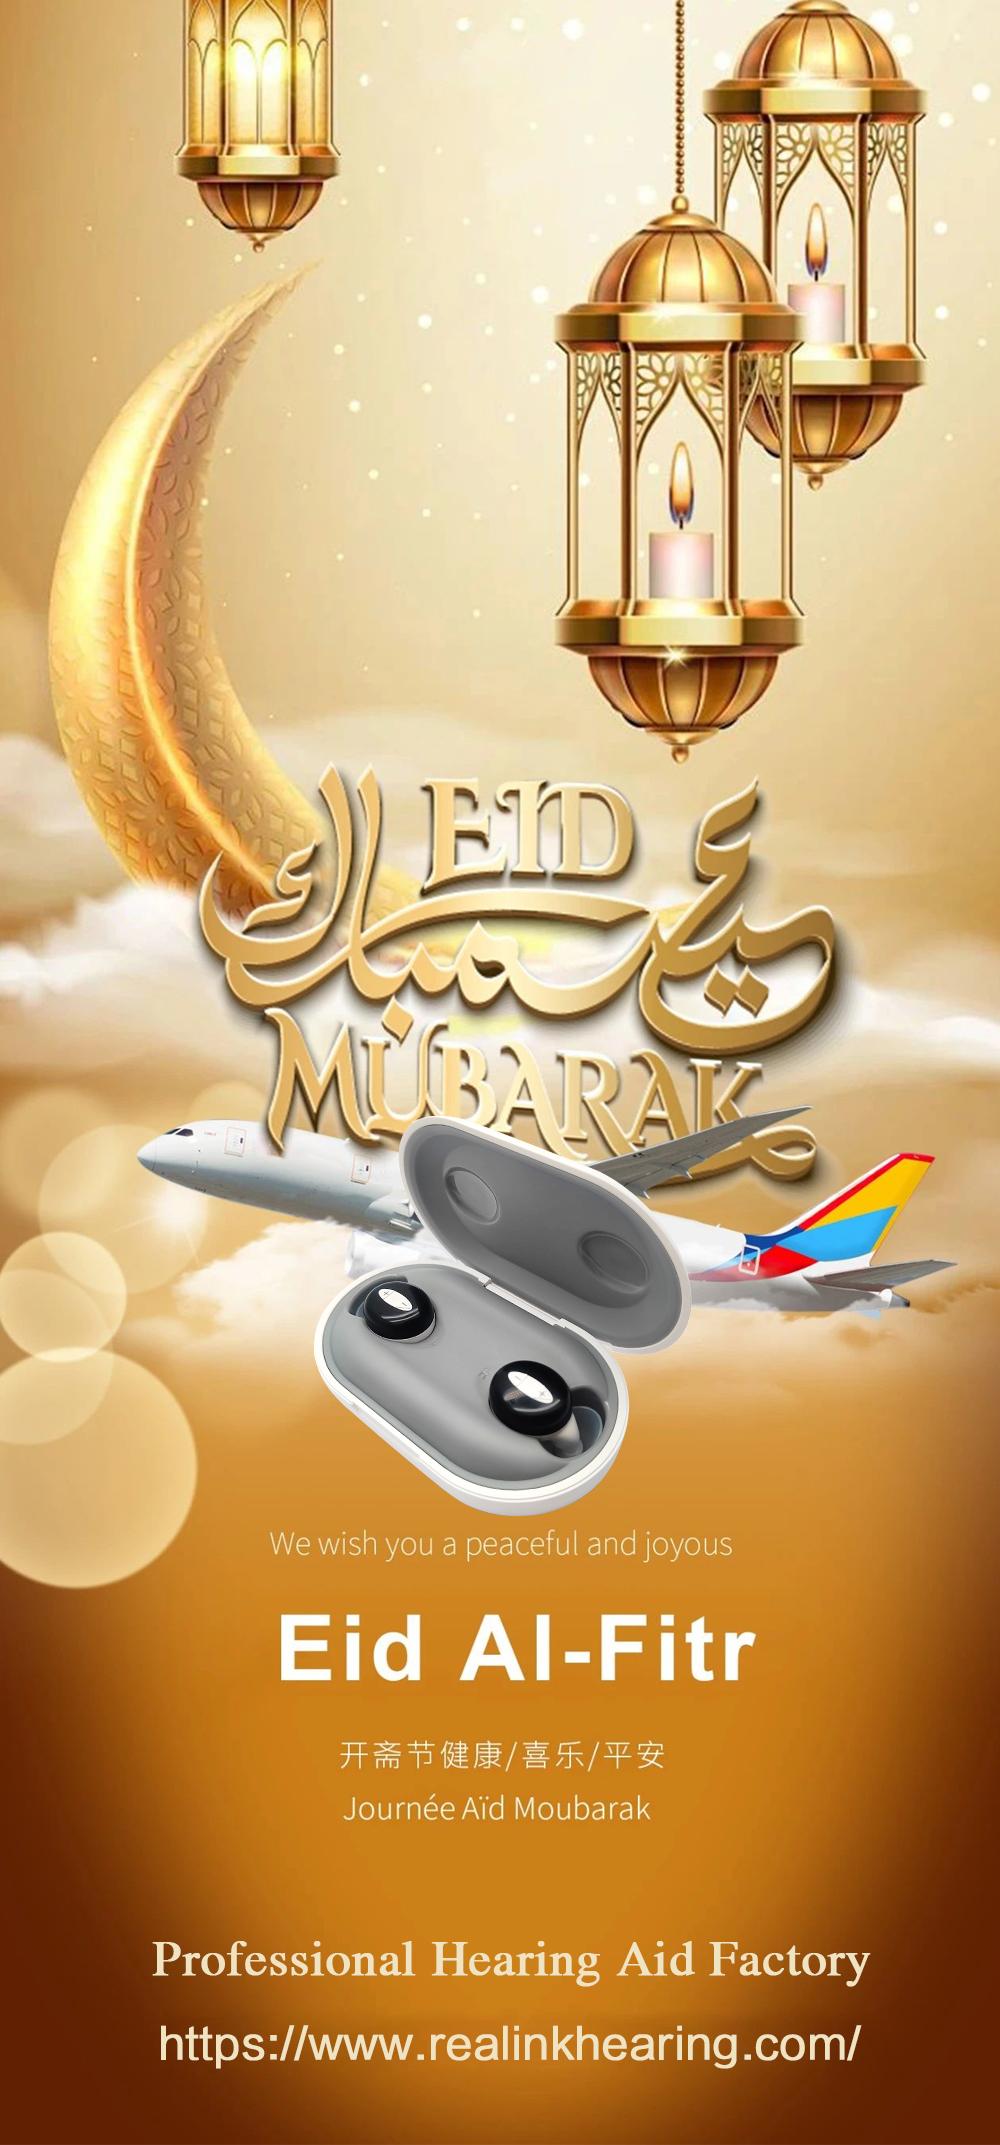 Eid Mubarak！开斋吉庆！